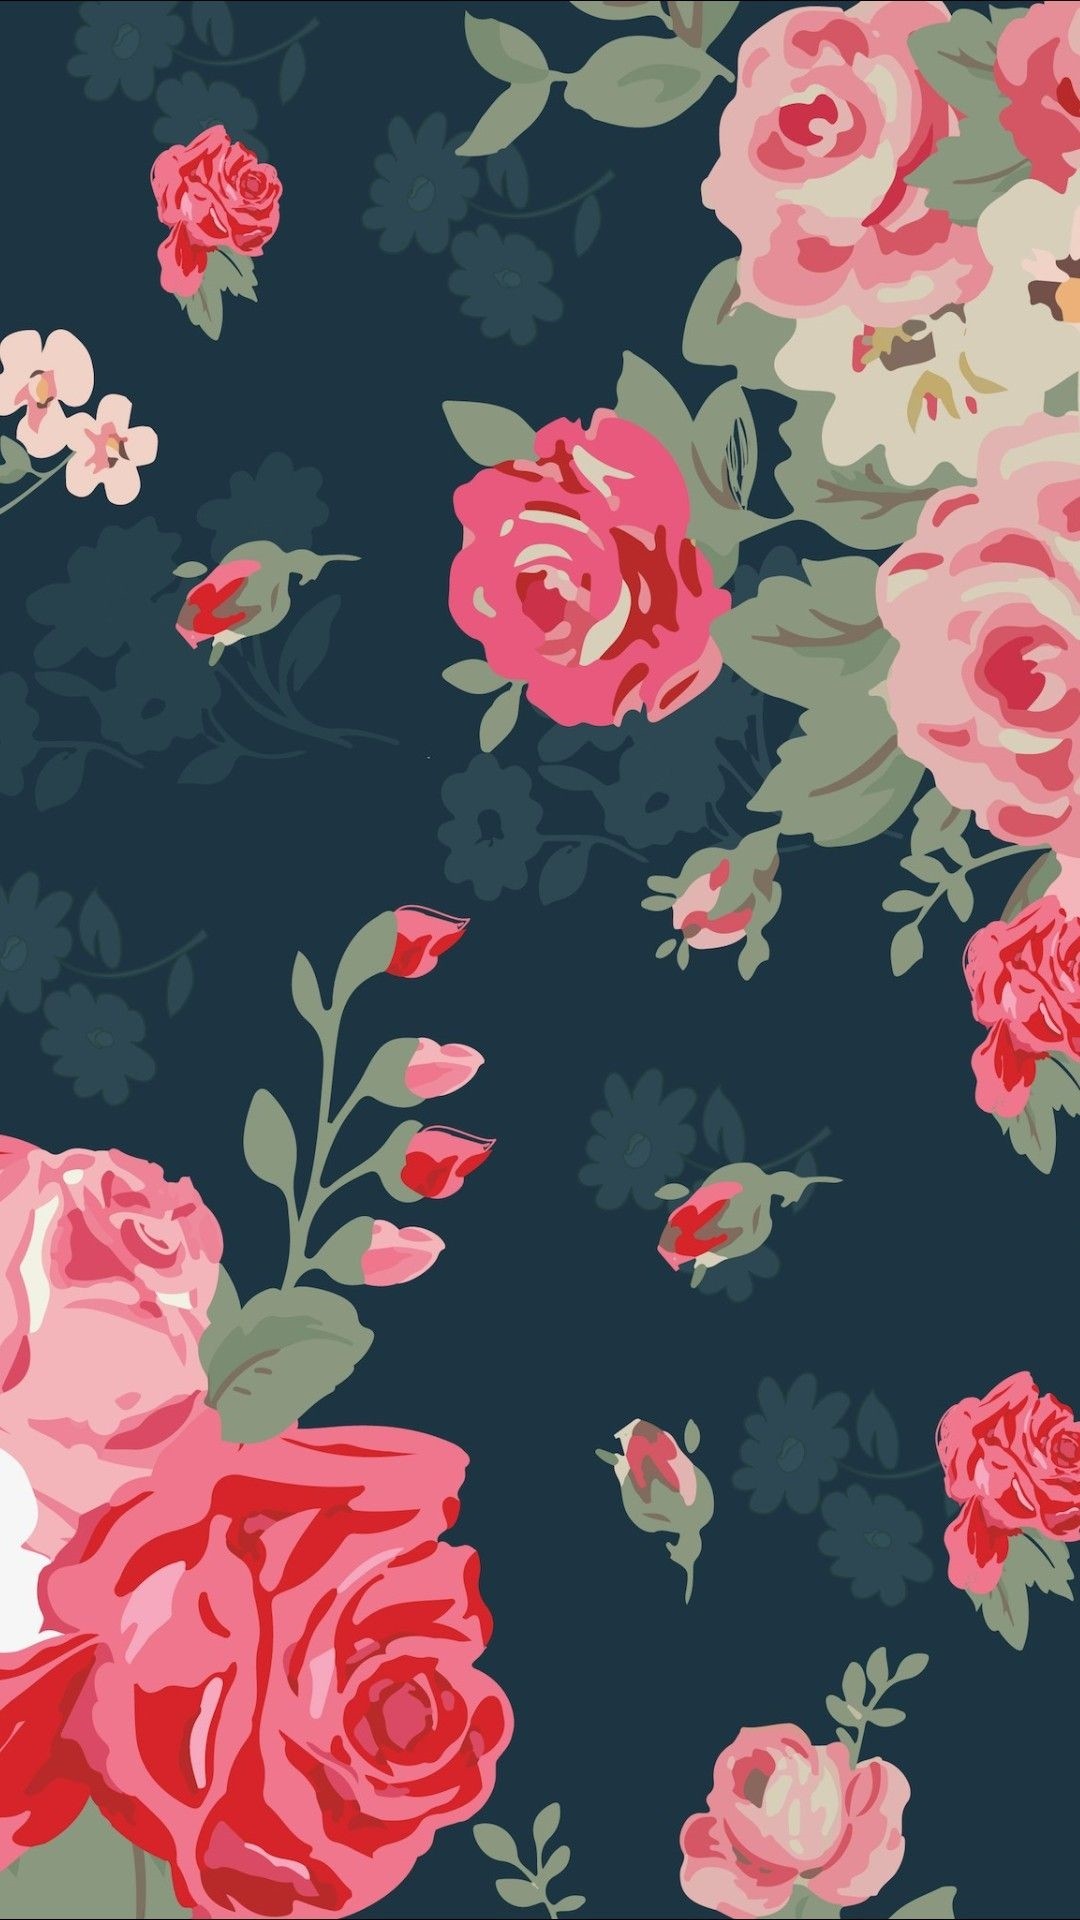 Floral phone wallpaper hd